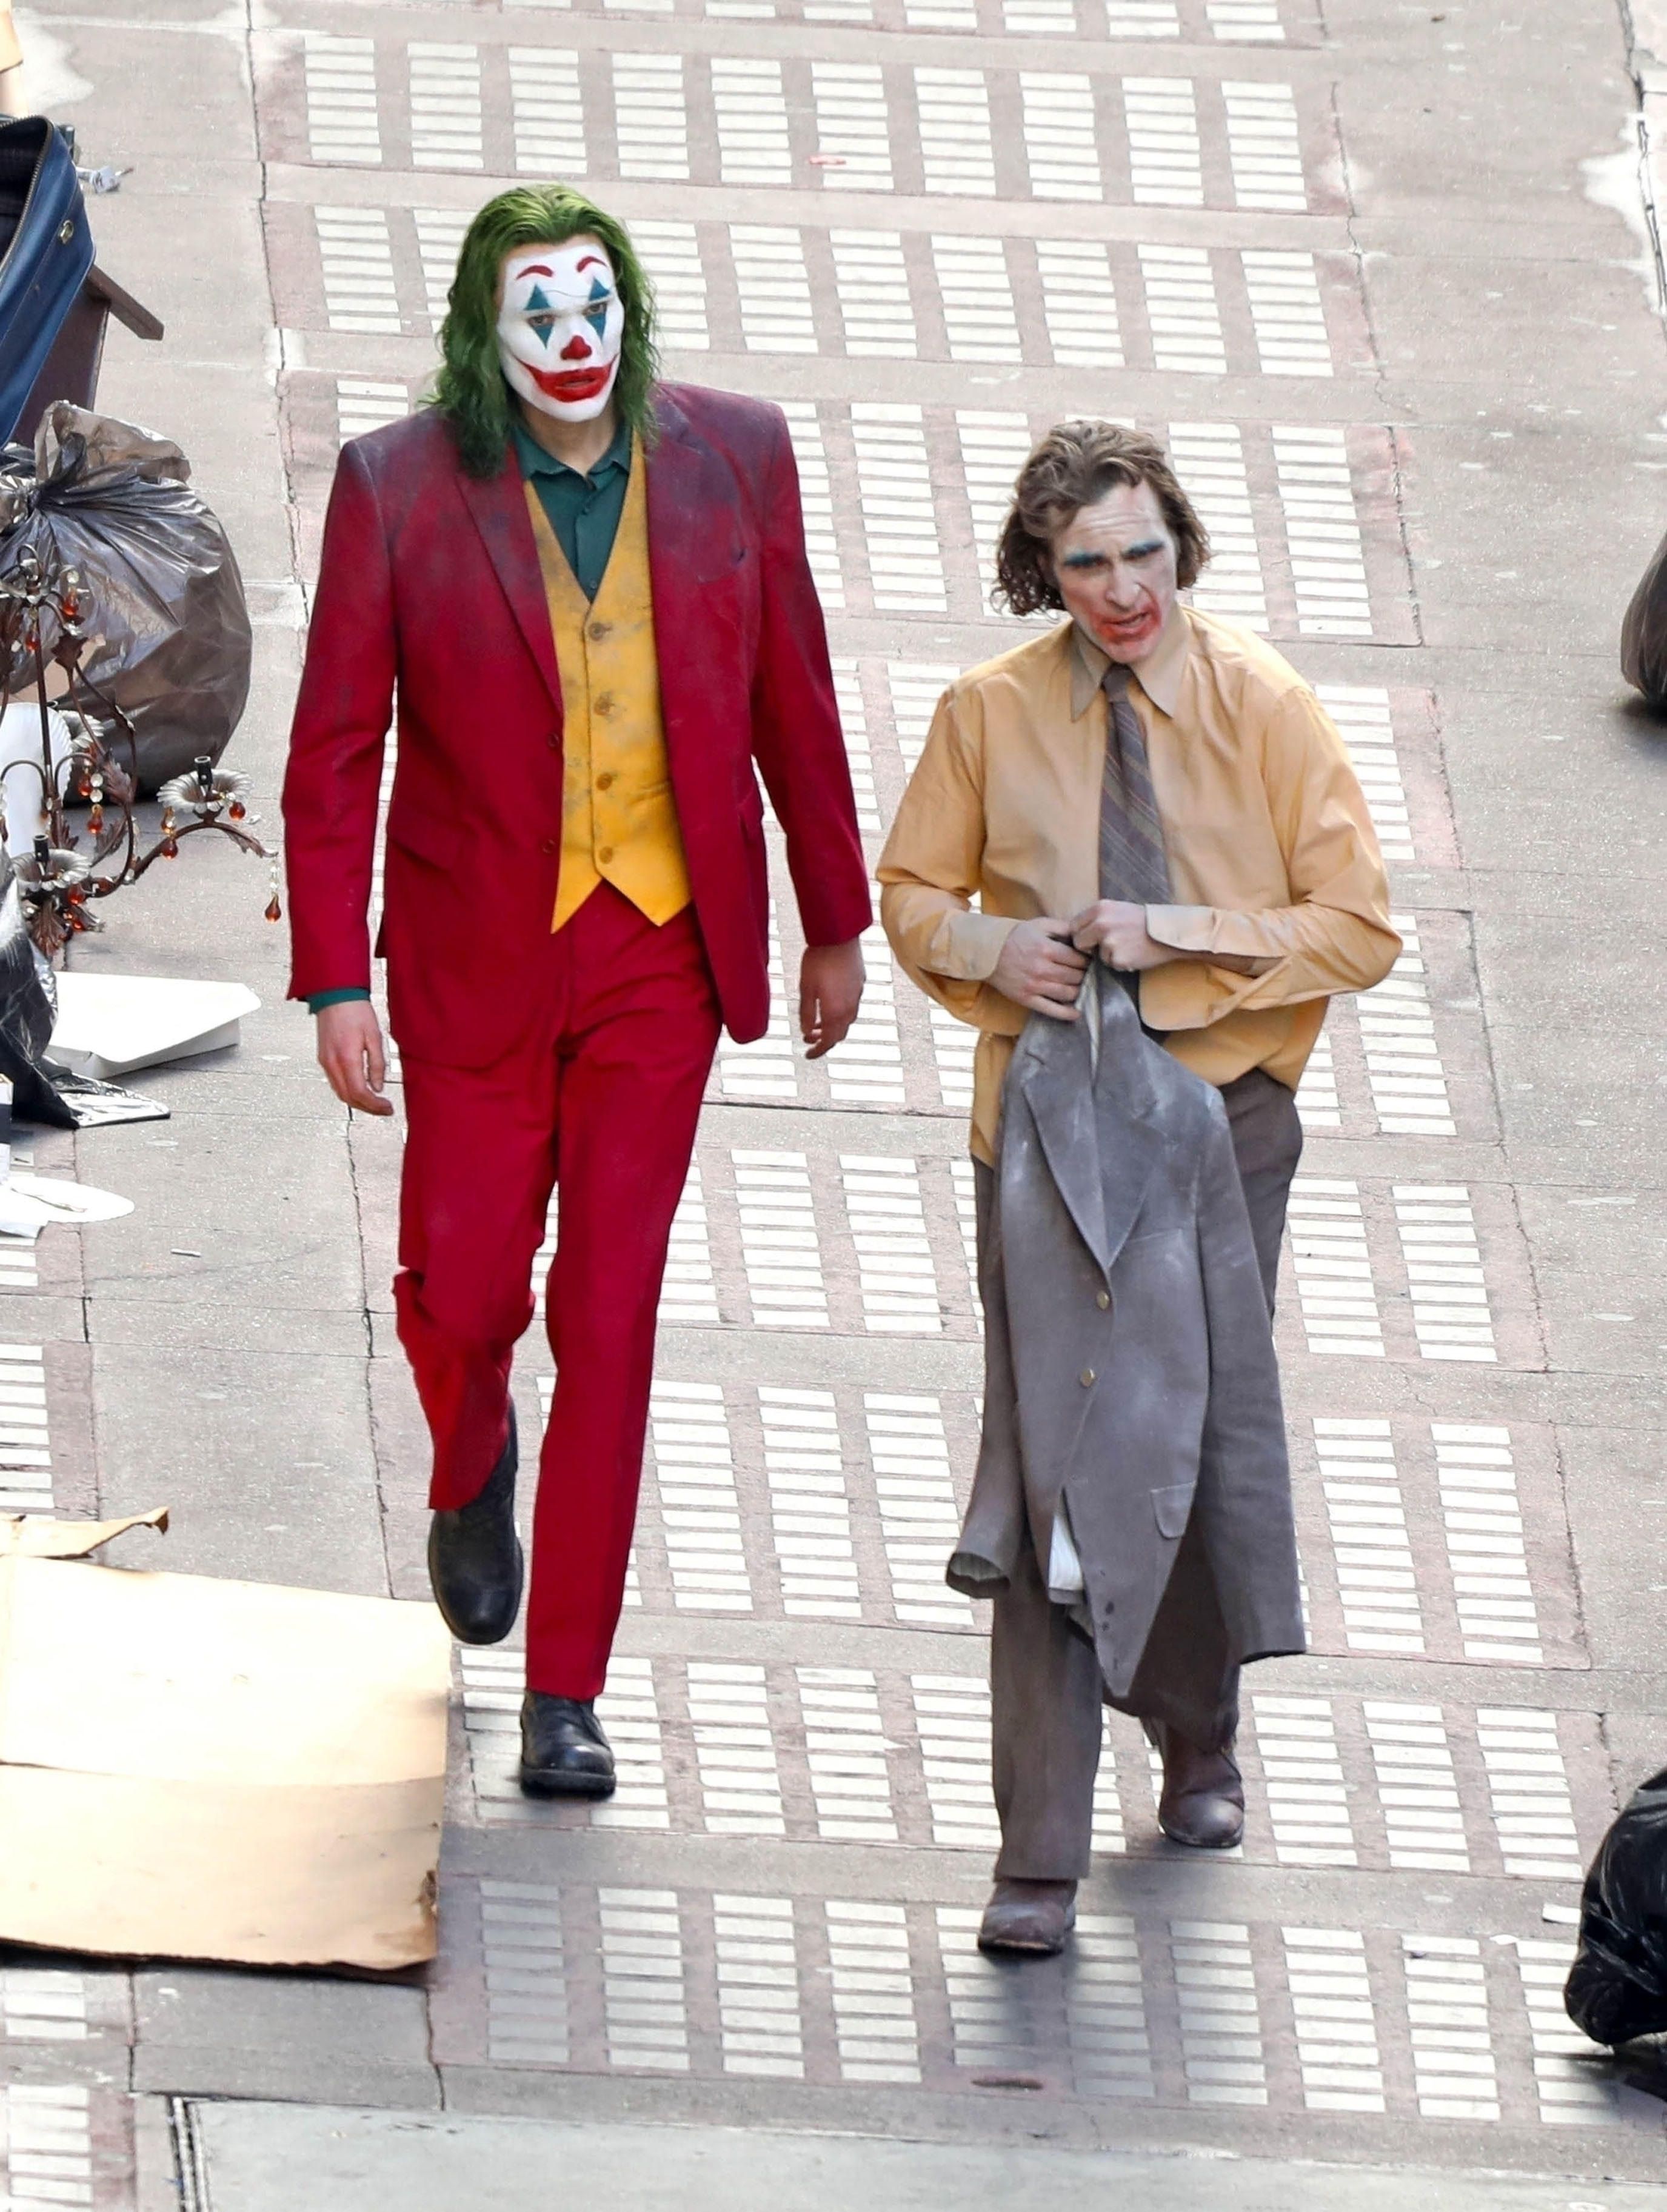 Joker 2: First Look at Joaquin Phoenix Revealed (Photo)